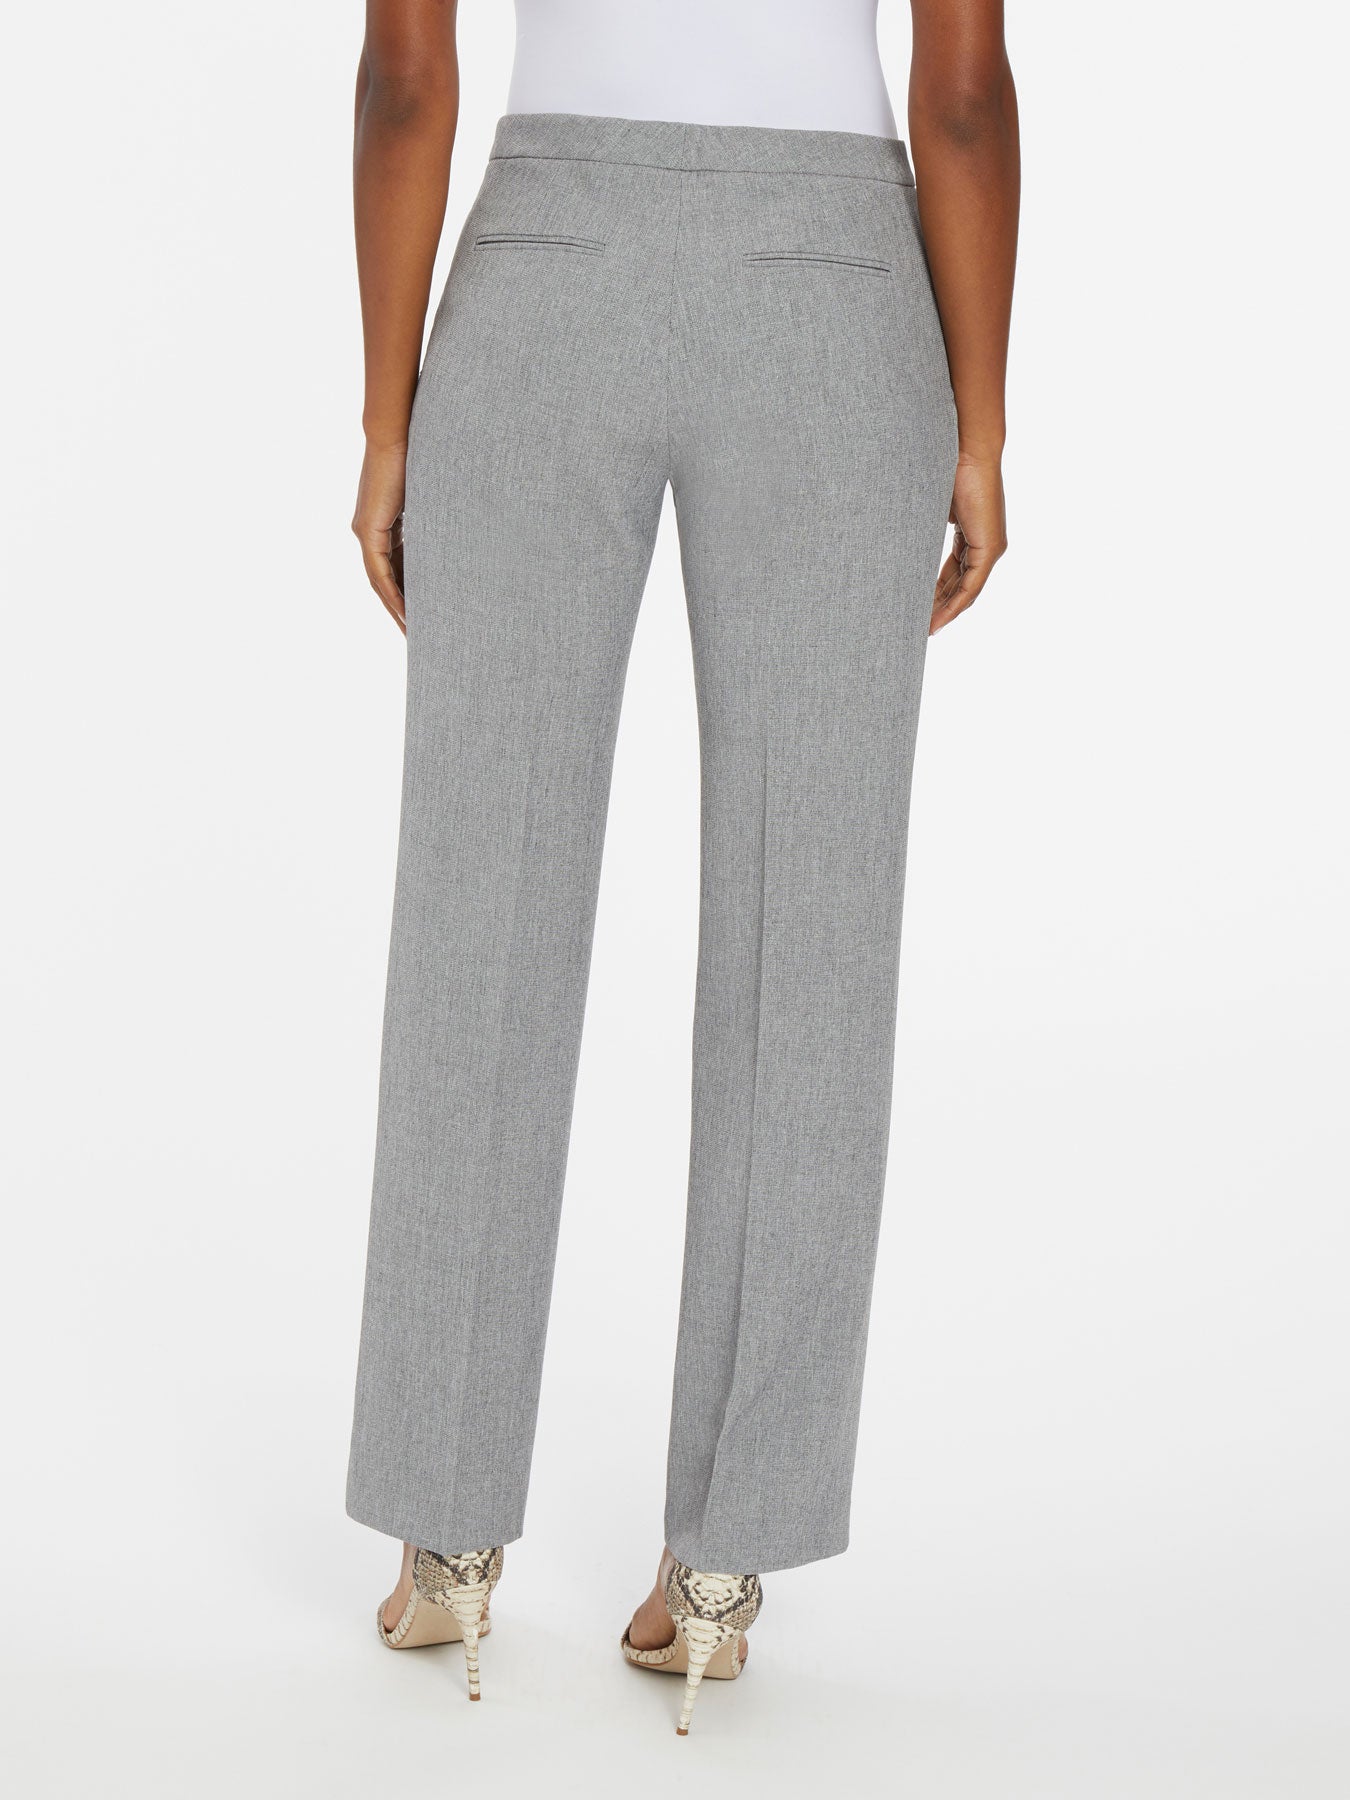 Kasper Women's Petite TAB Front Pant, Grey/Black, 8P at